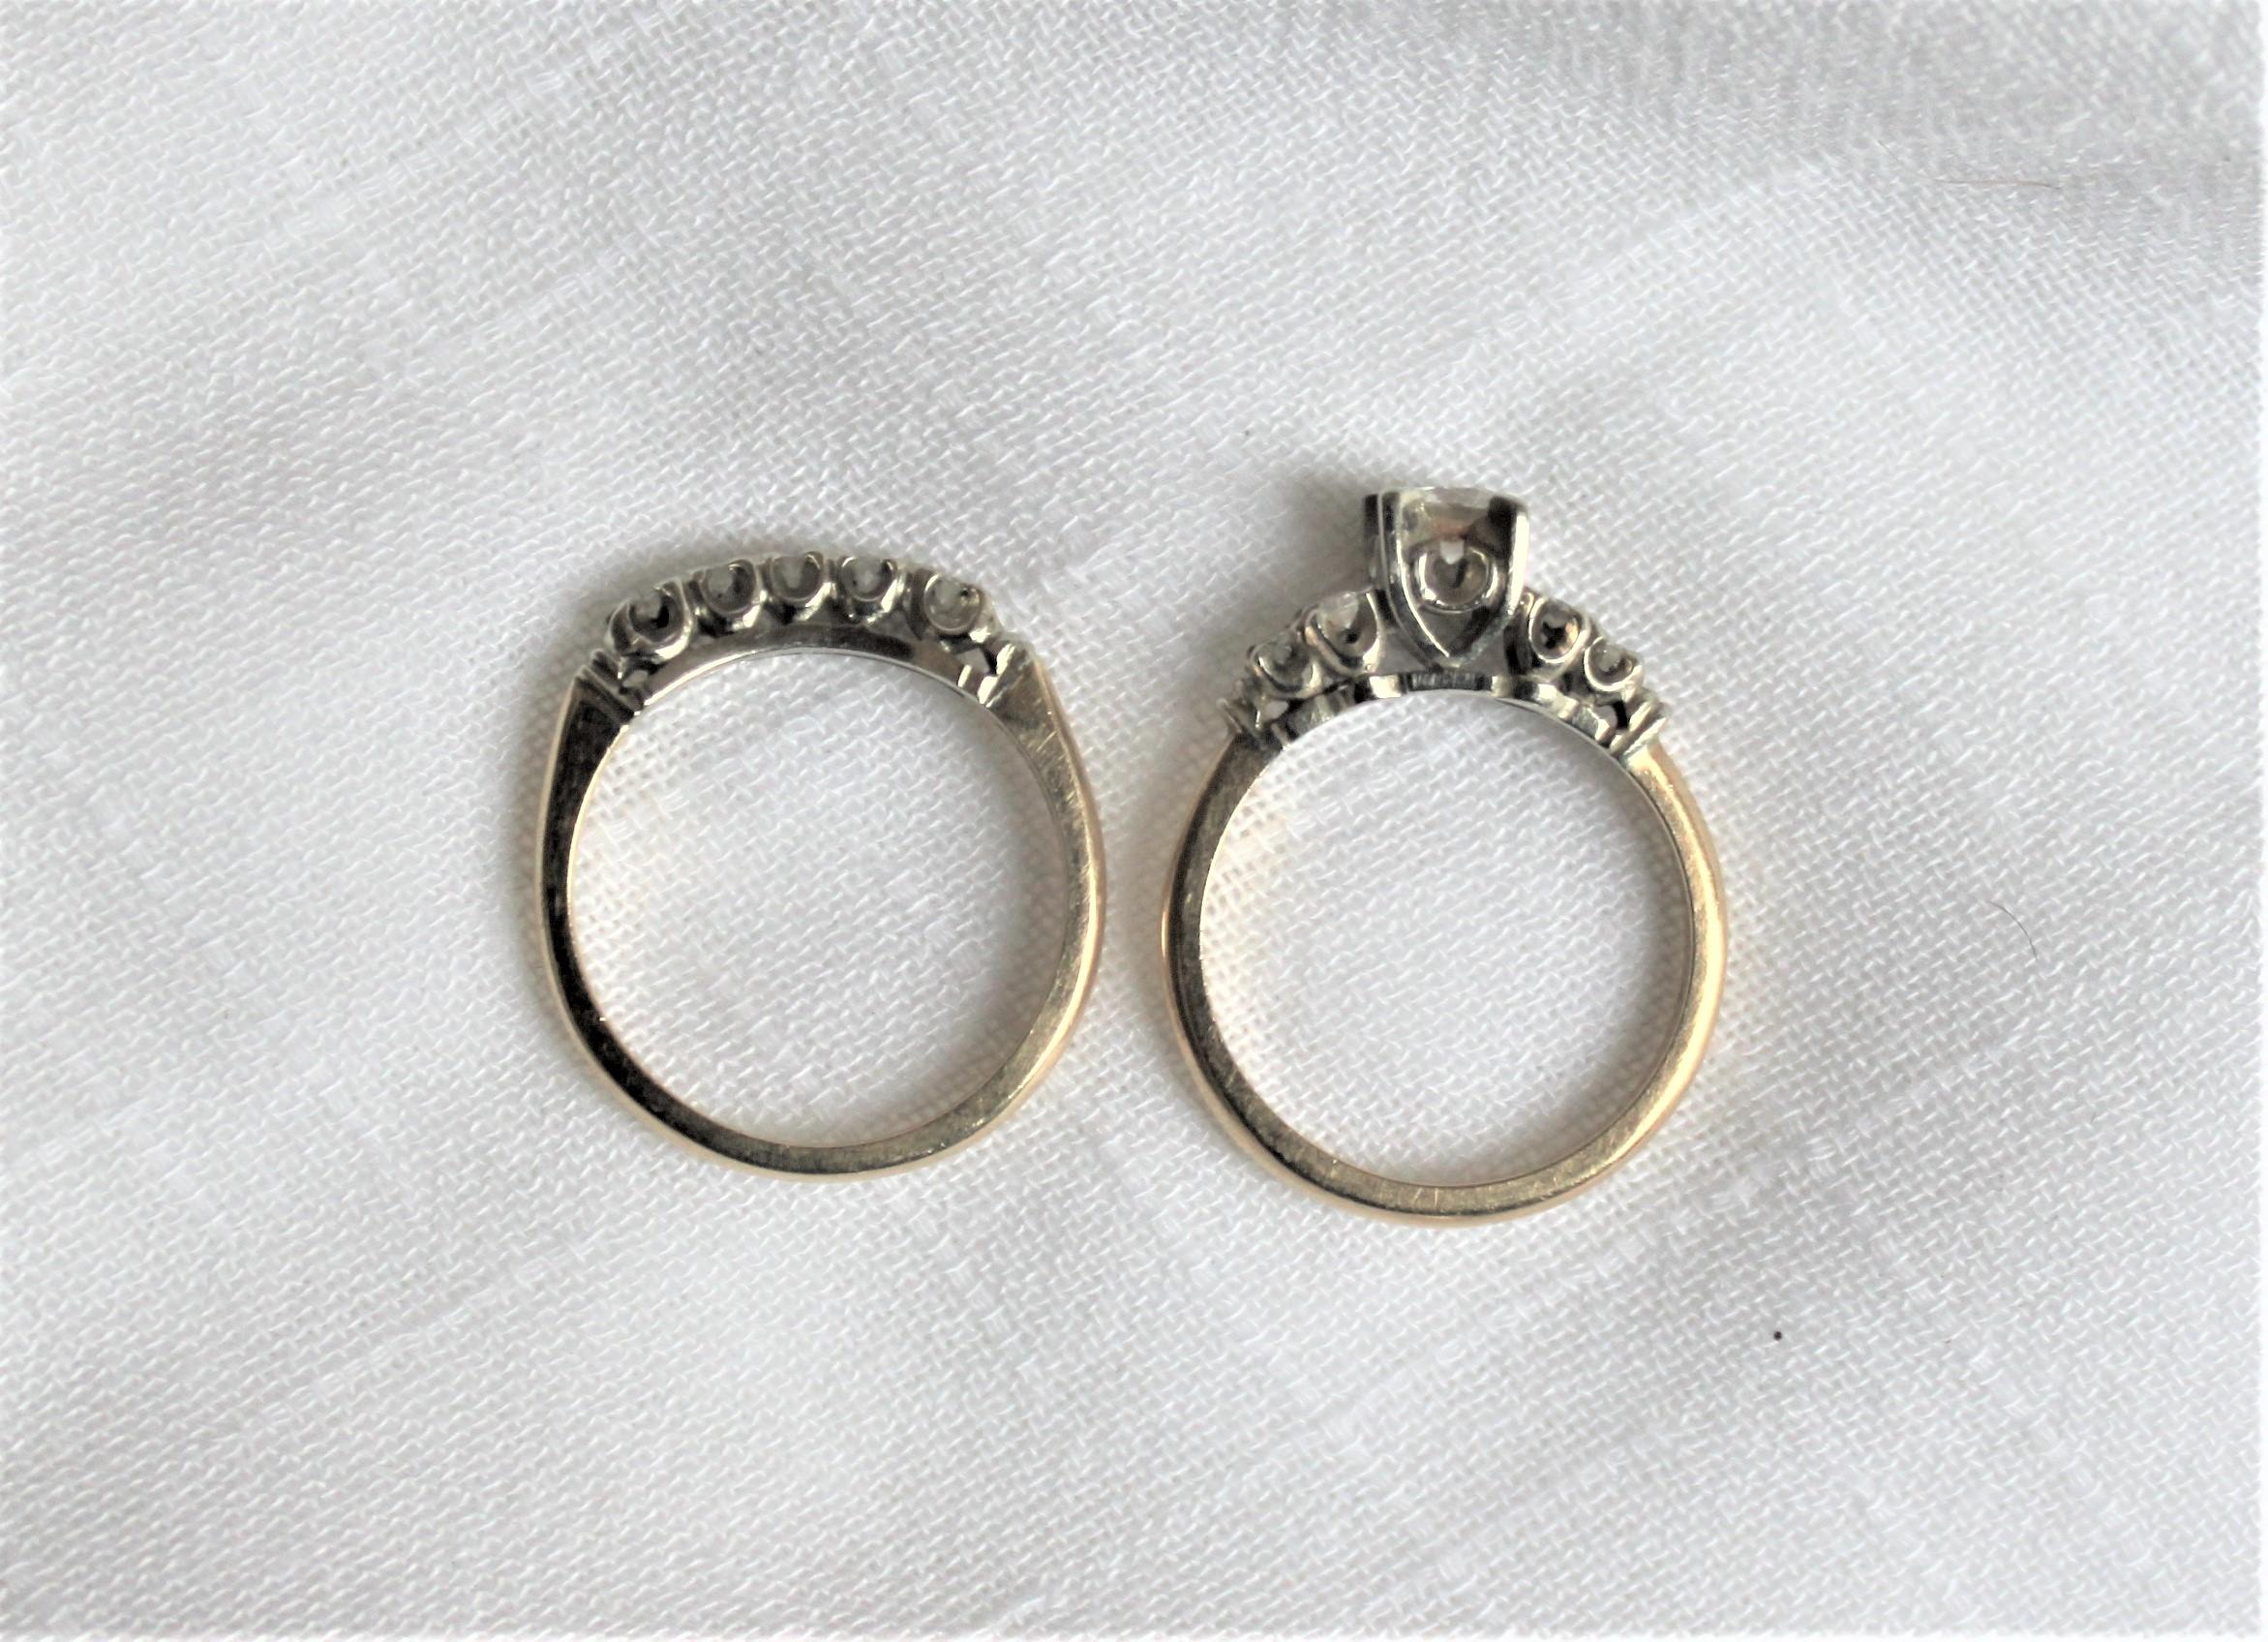 1960s wedding ring sets